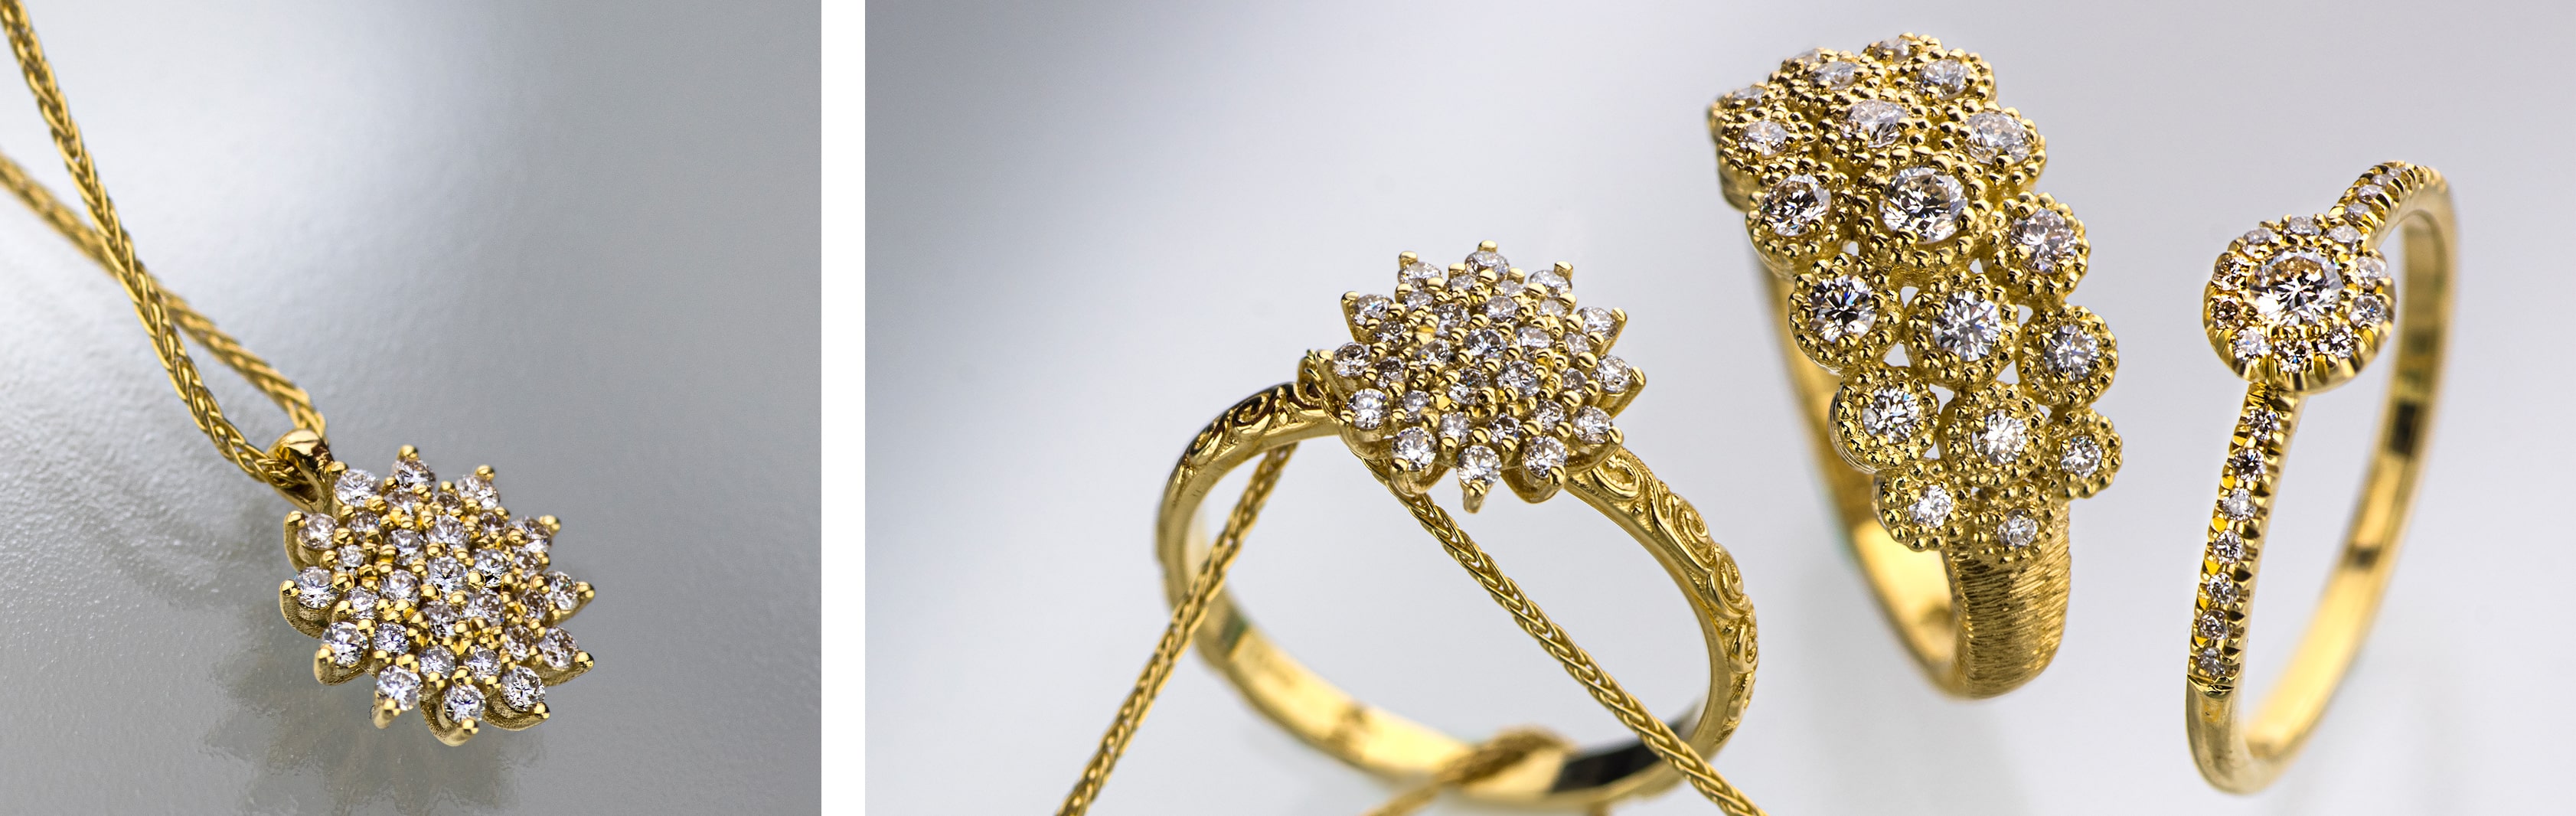 Fine Gold Jewelry, 14k gold ring with Diamonds, 14k gold earrings with Diamonds, 14k gold necklace with Diamonds, Gras Gold Jewelry, design by gras jewelry, israeli jewelry